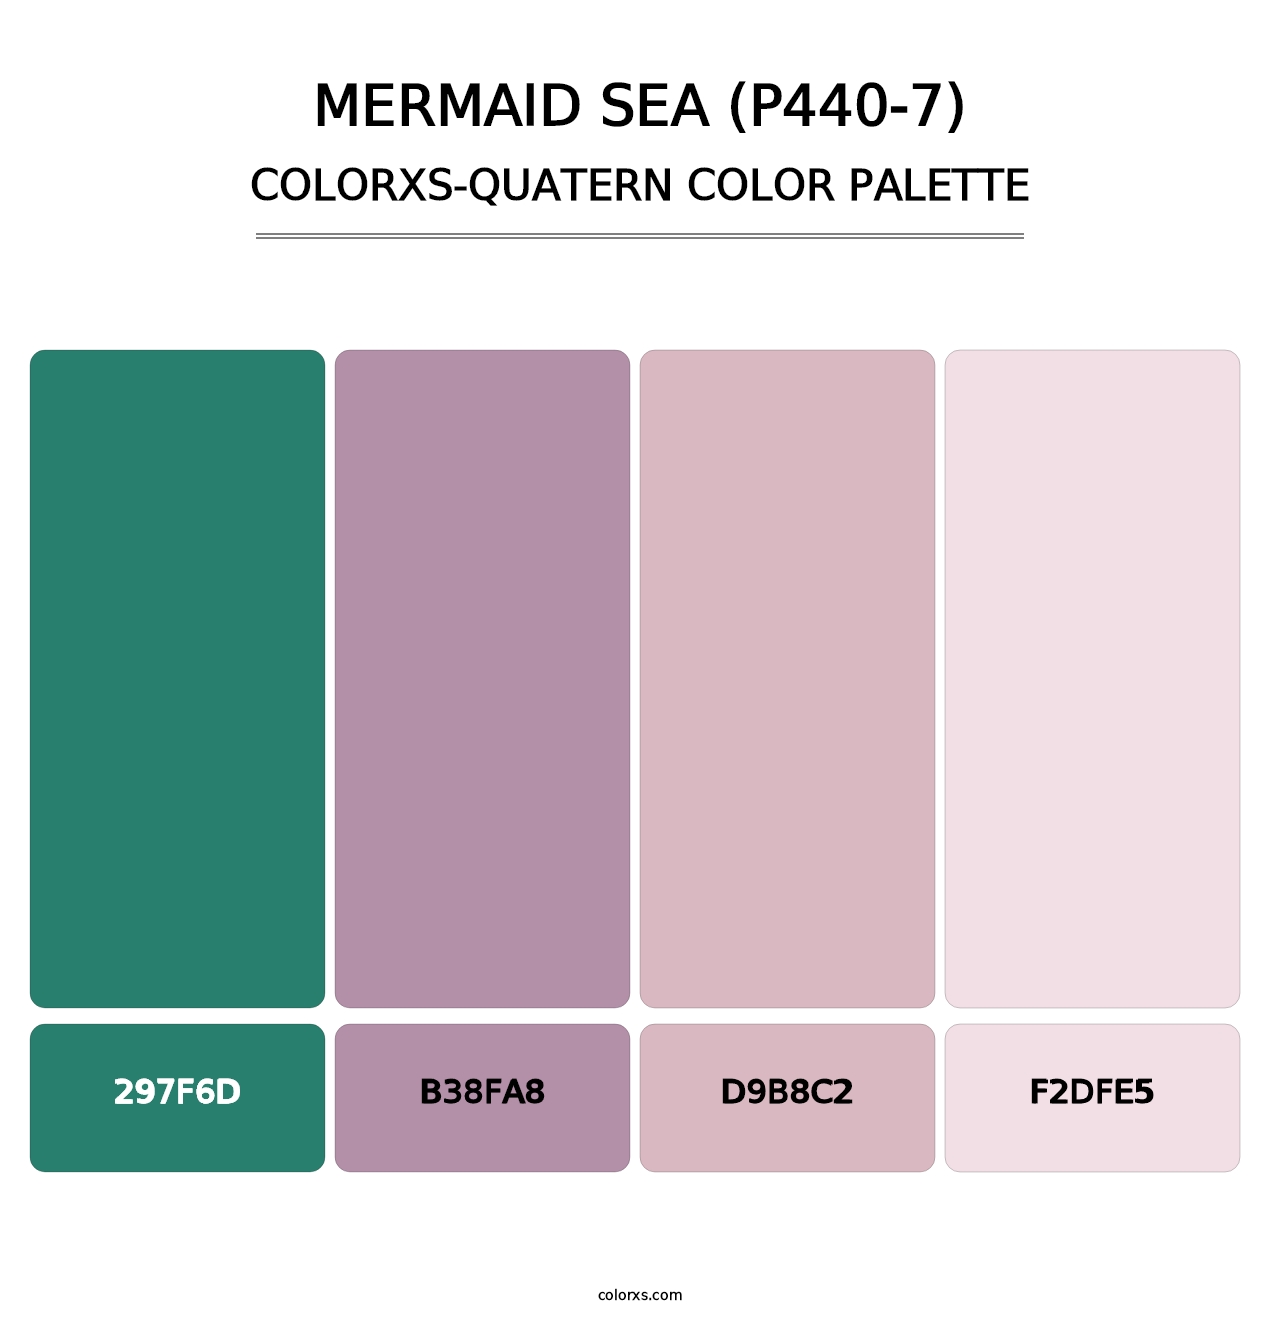 Mermaid Sea (P440-7) - Colorxs Quatern Palette